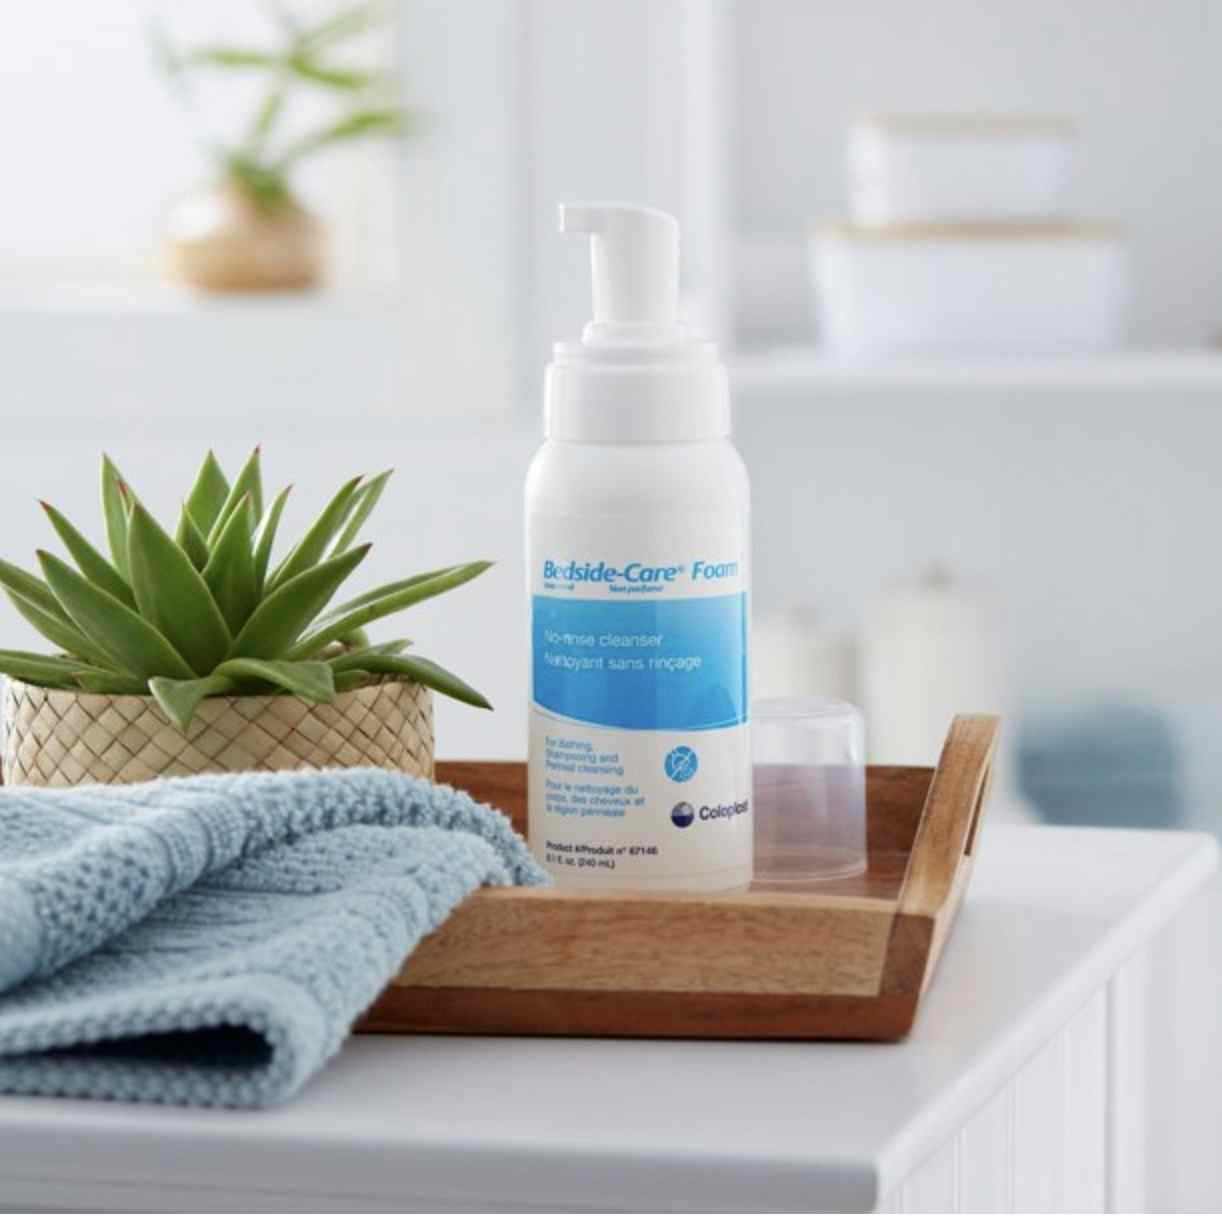 Bedside-Care Rinse-Free Shampoo and Body Wash Foam